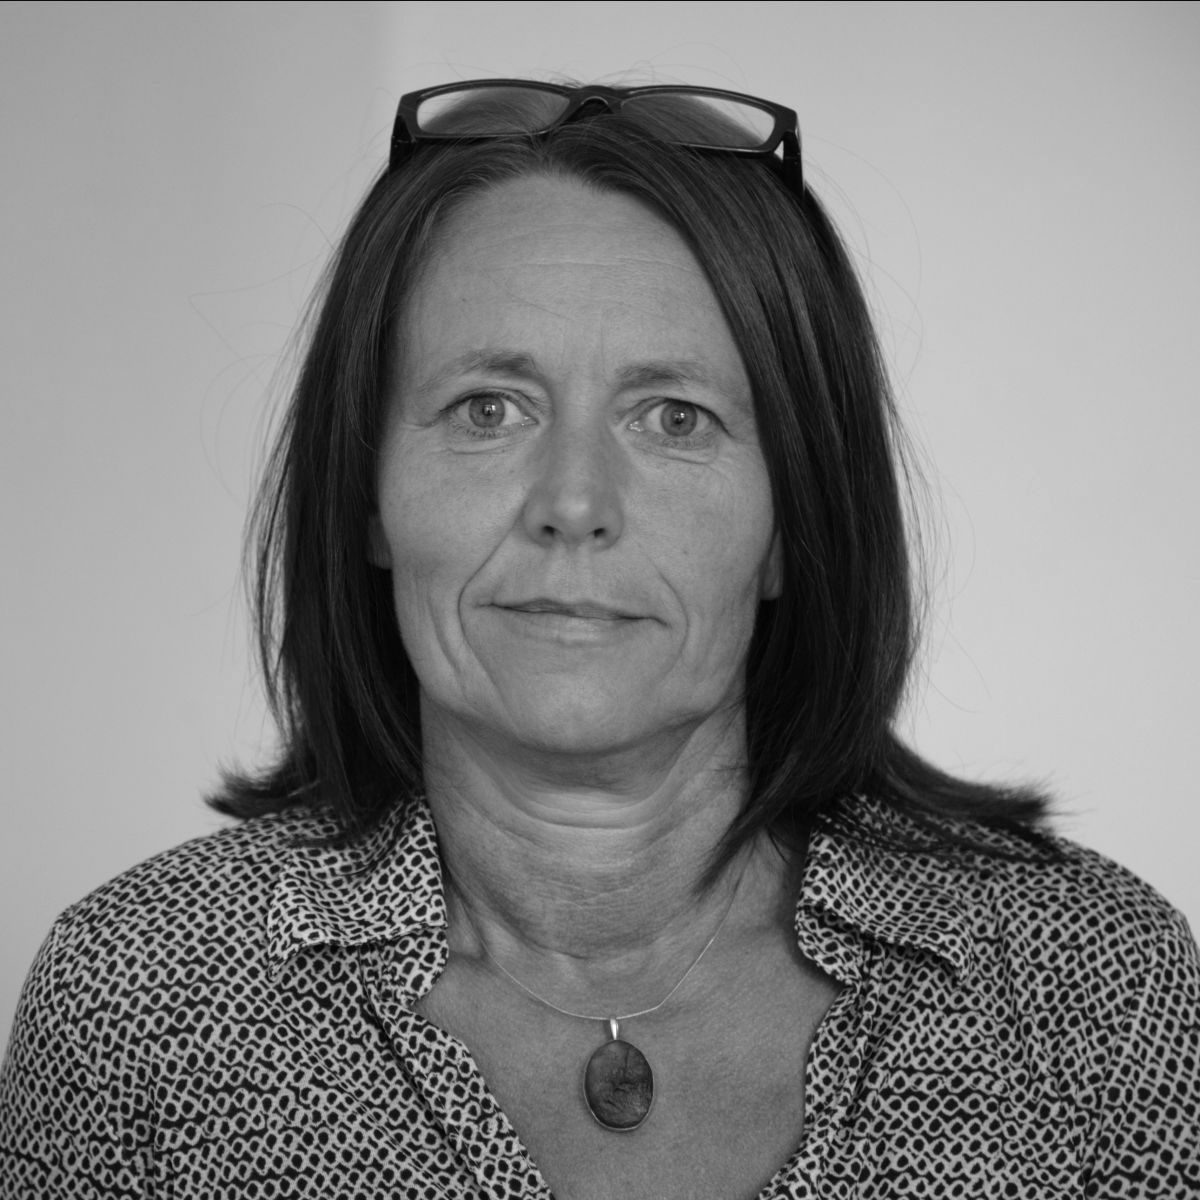 Project manager Uta Rüchel